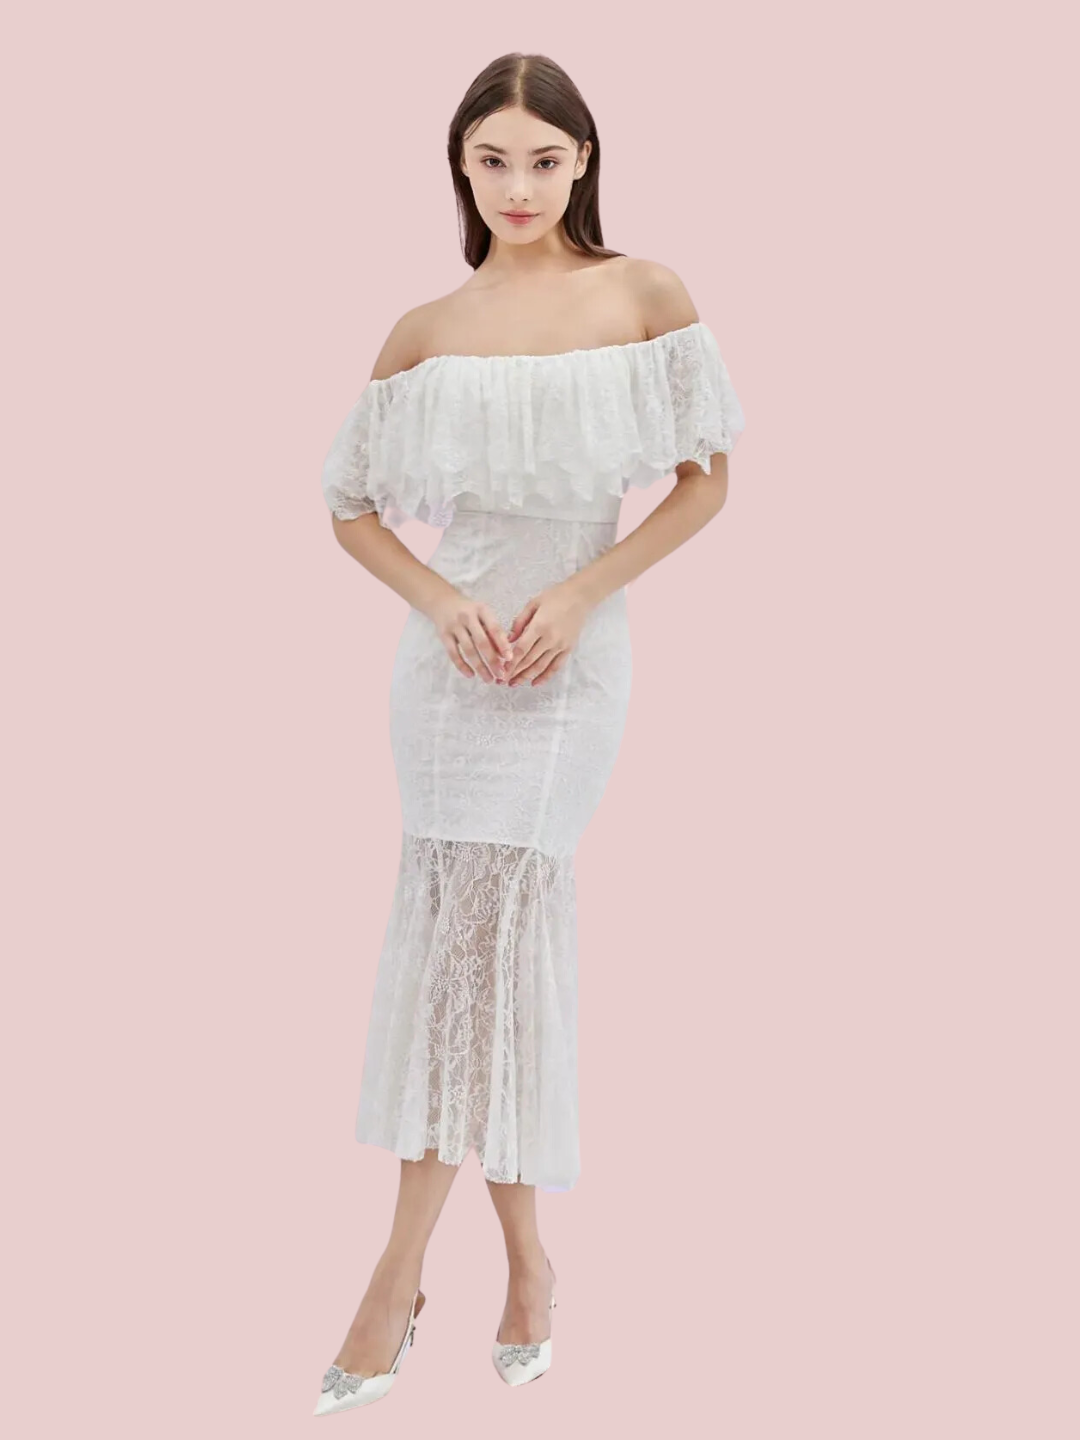 Geraldin White Lace Long Dress